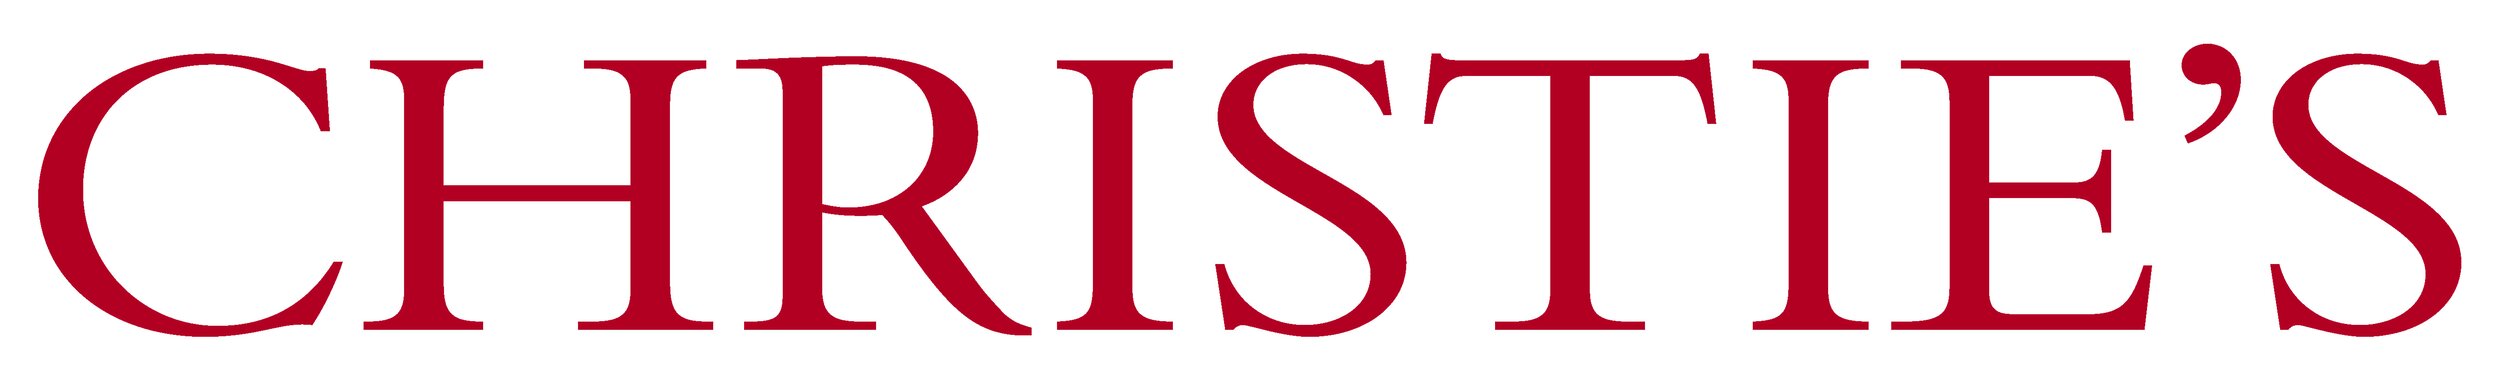 Christies_Logo_Red.jpg